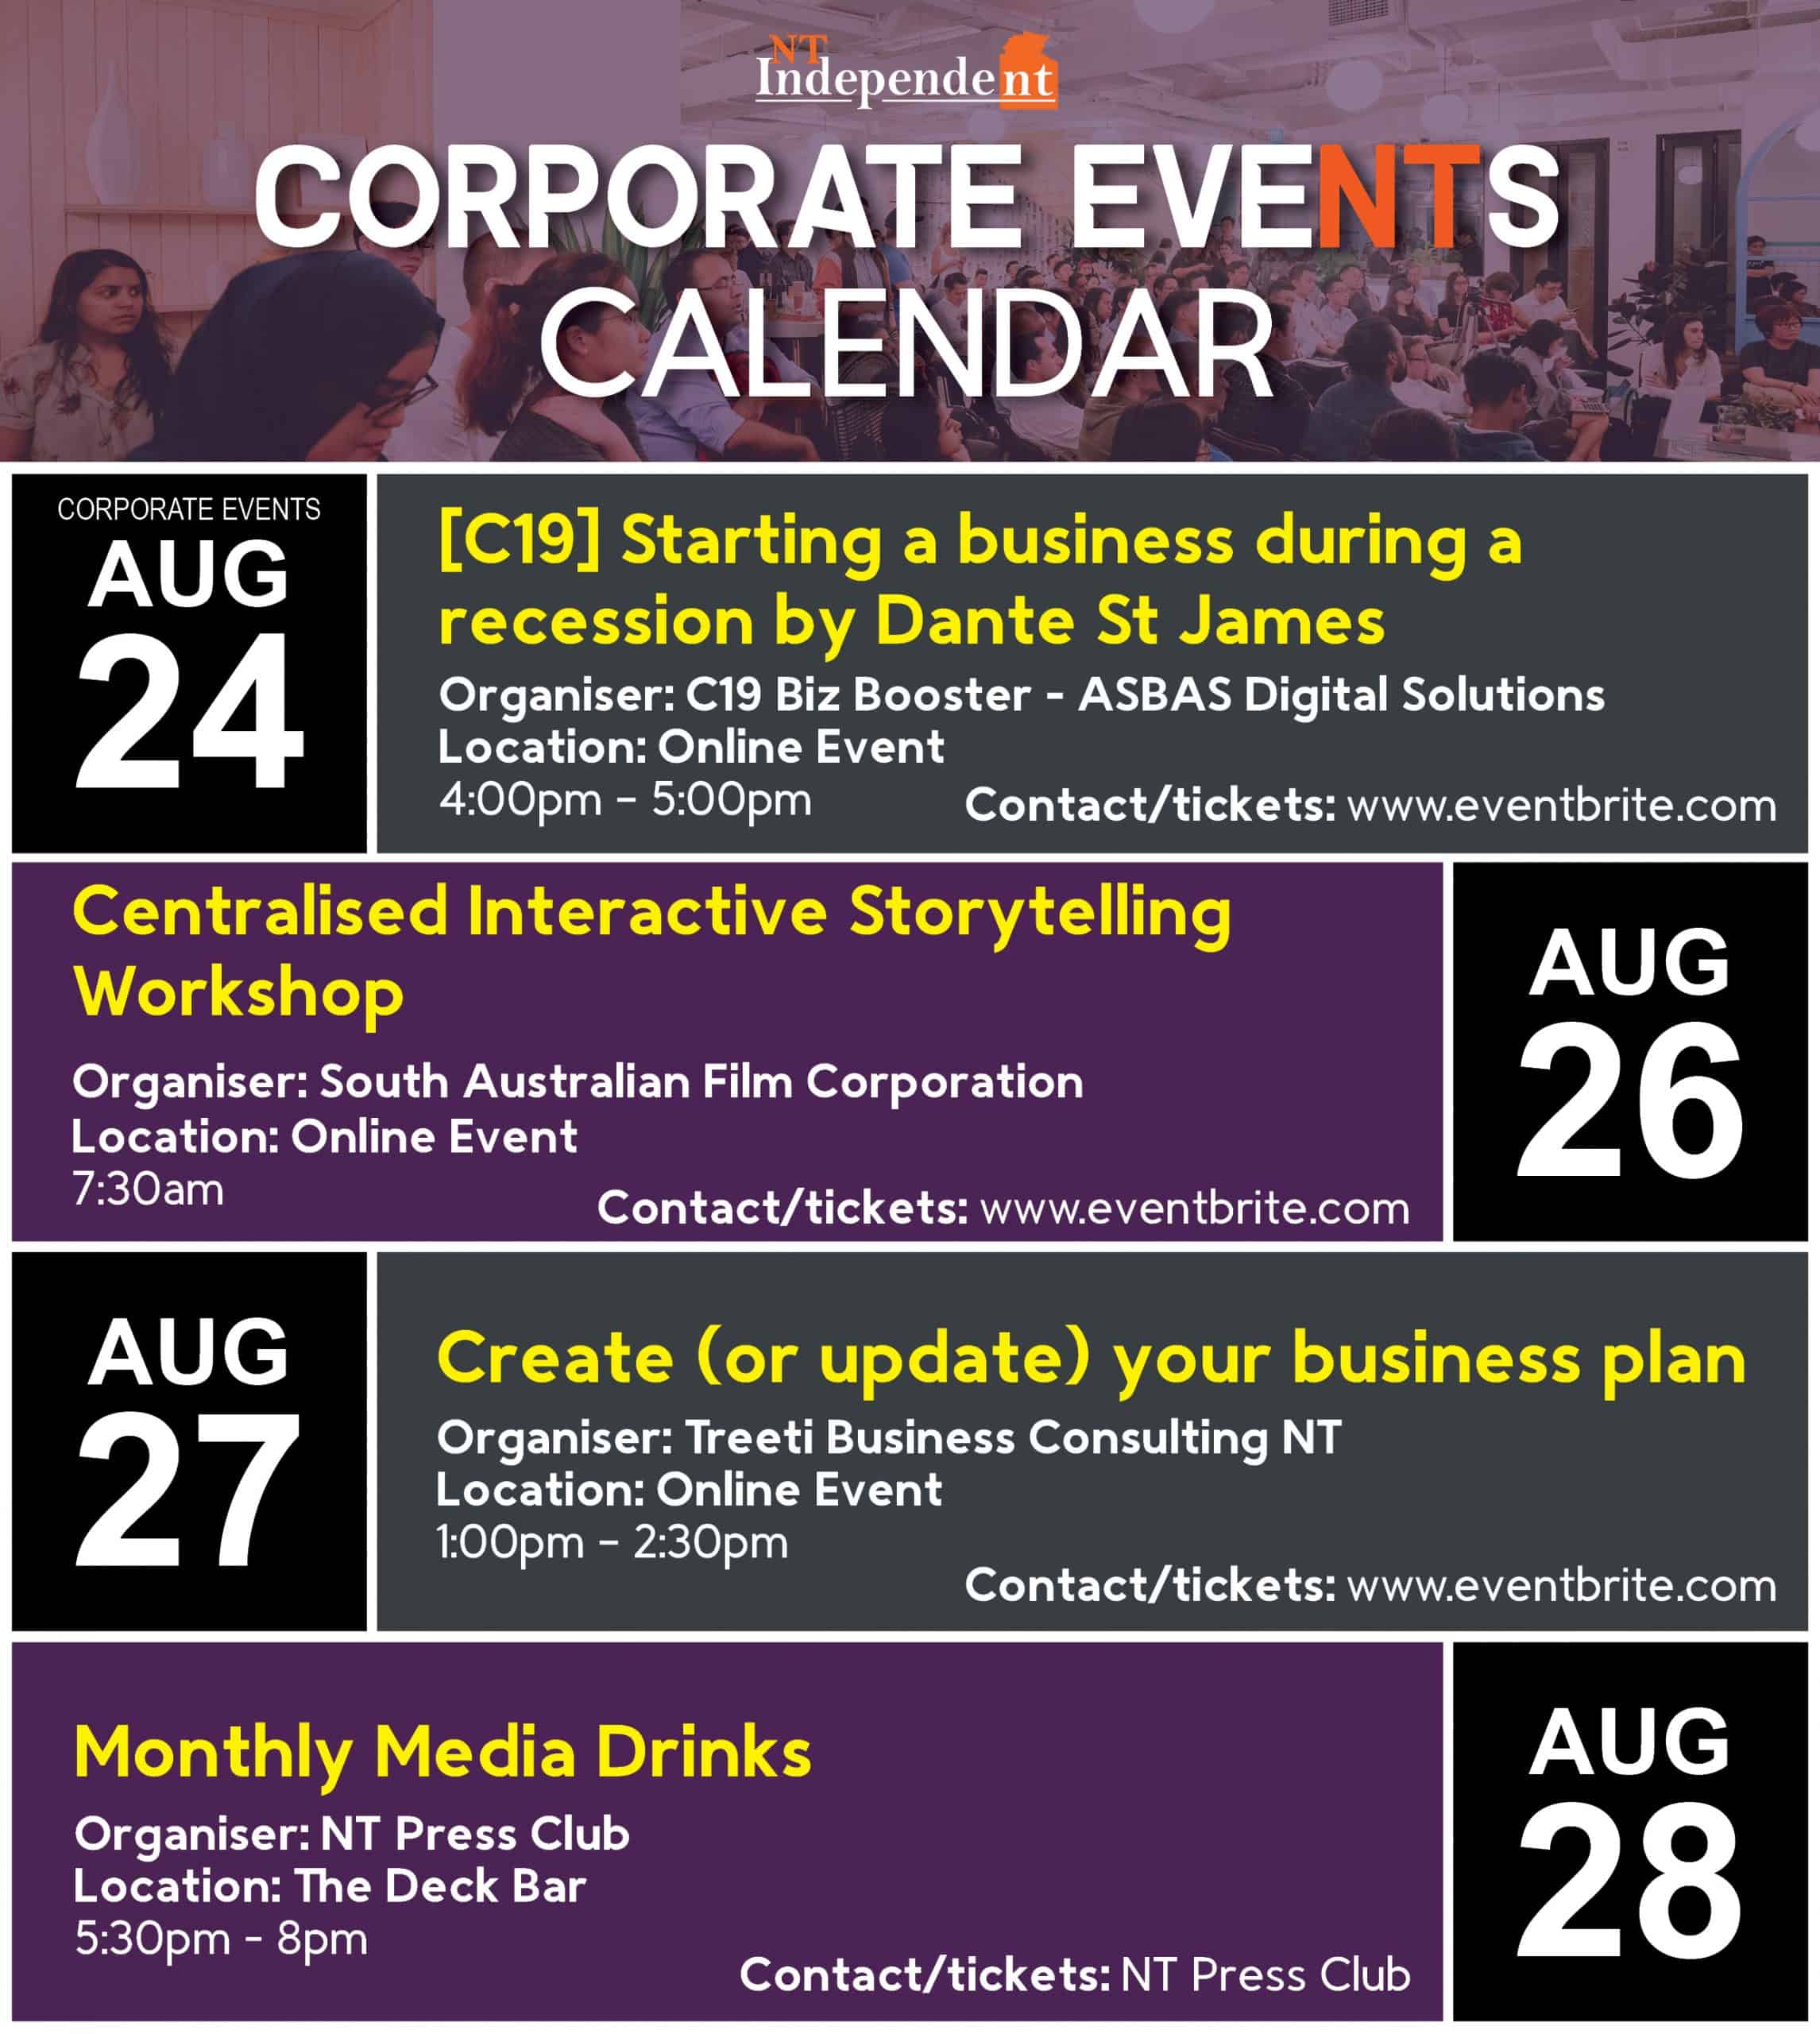 Corporate events calendar August